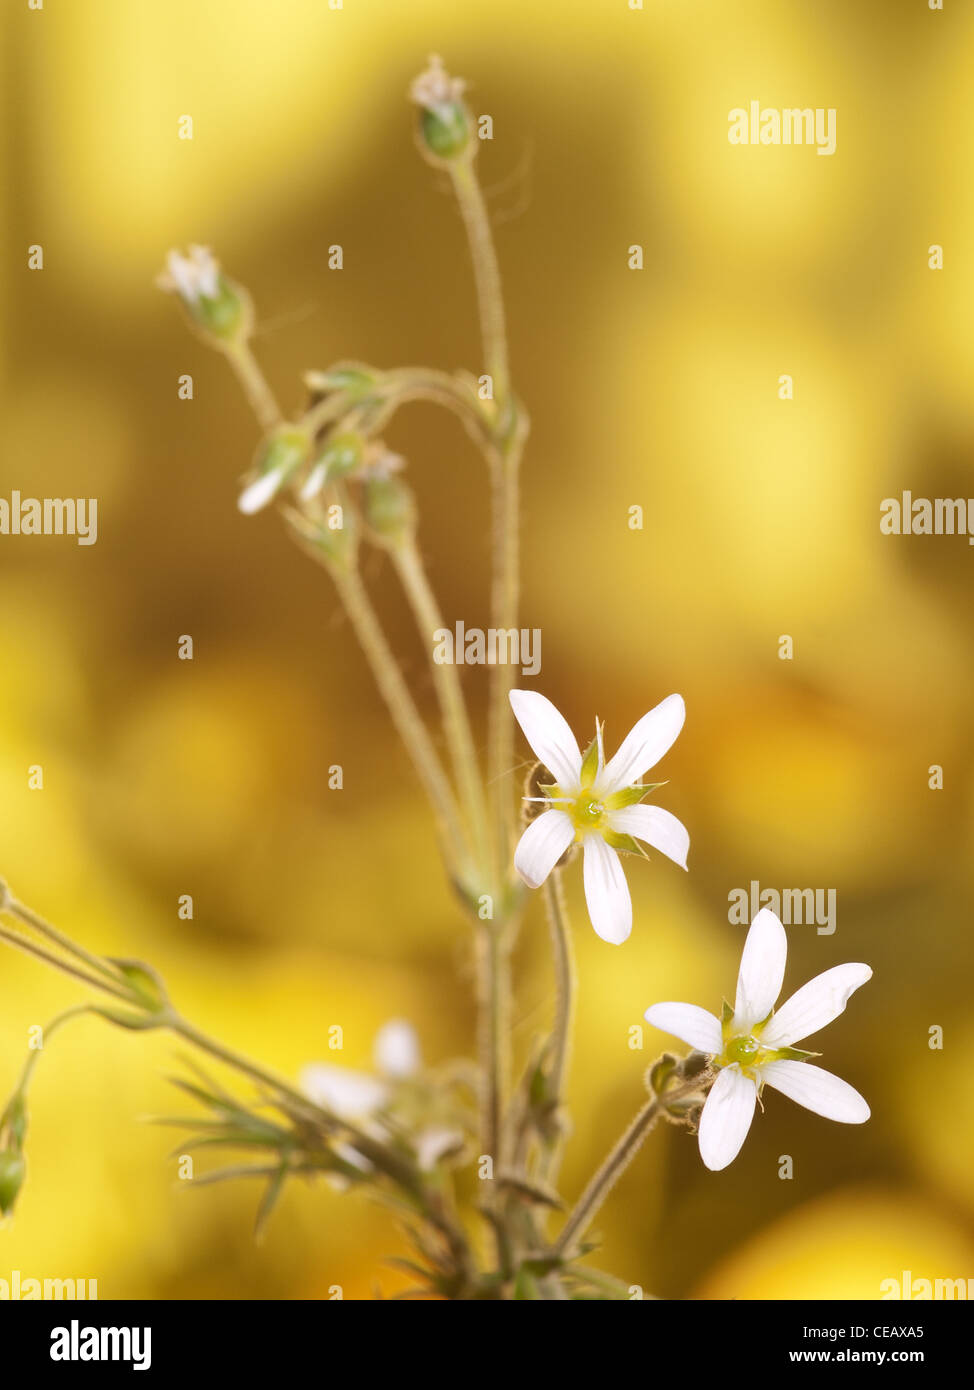 Slander leaf  Sandwort, Minuartia hybrida, portrait of white flowers with nice out focus background. Stock Photo